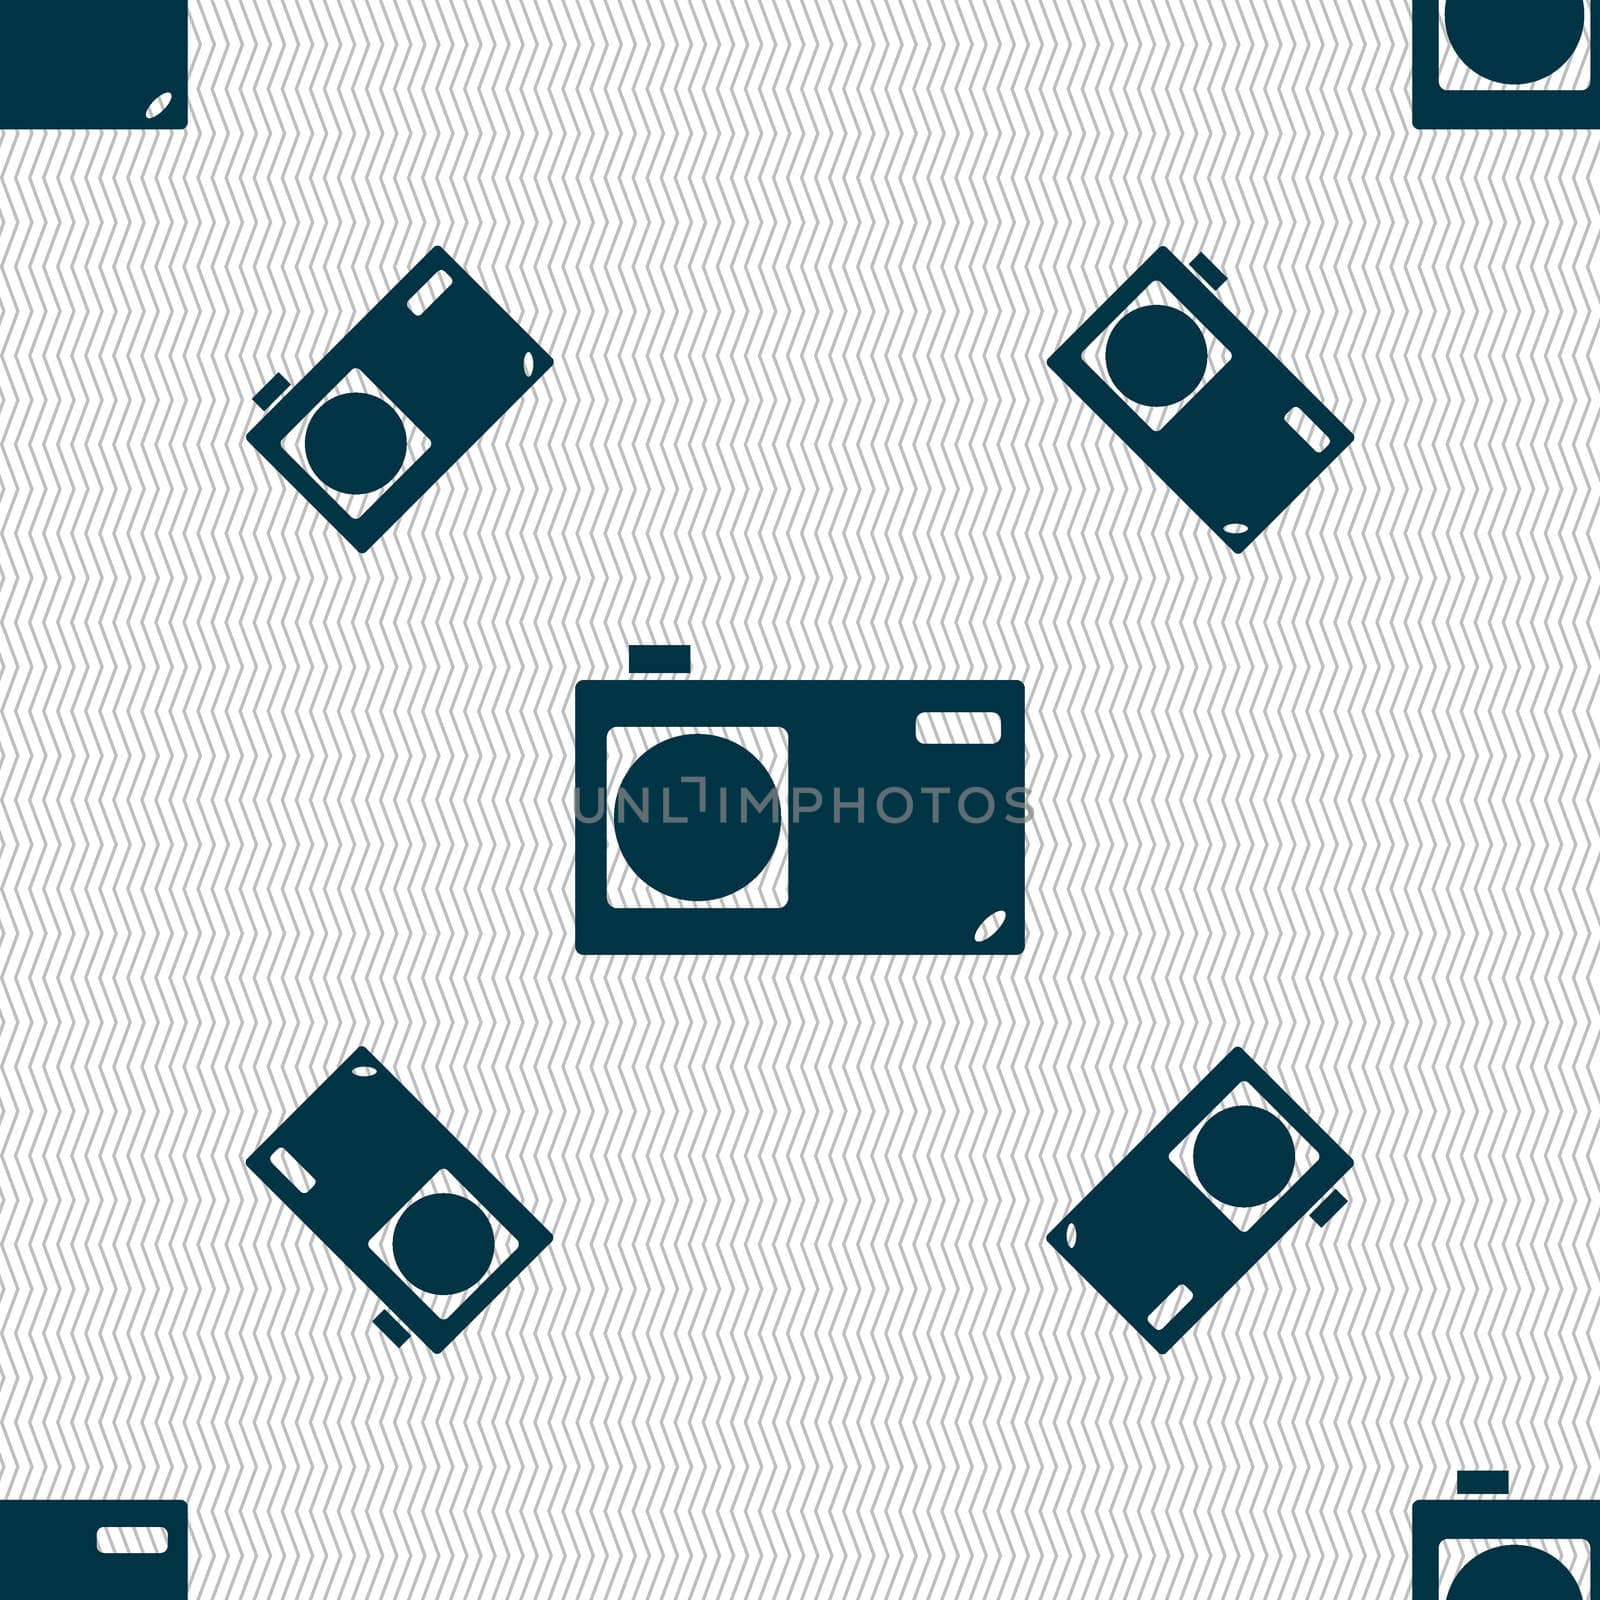 Photo camera sign icon. Digital symbol. Seamless pattern with geometric texture. illustration